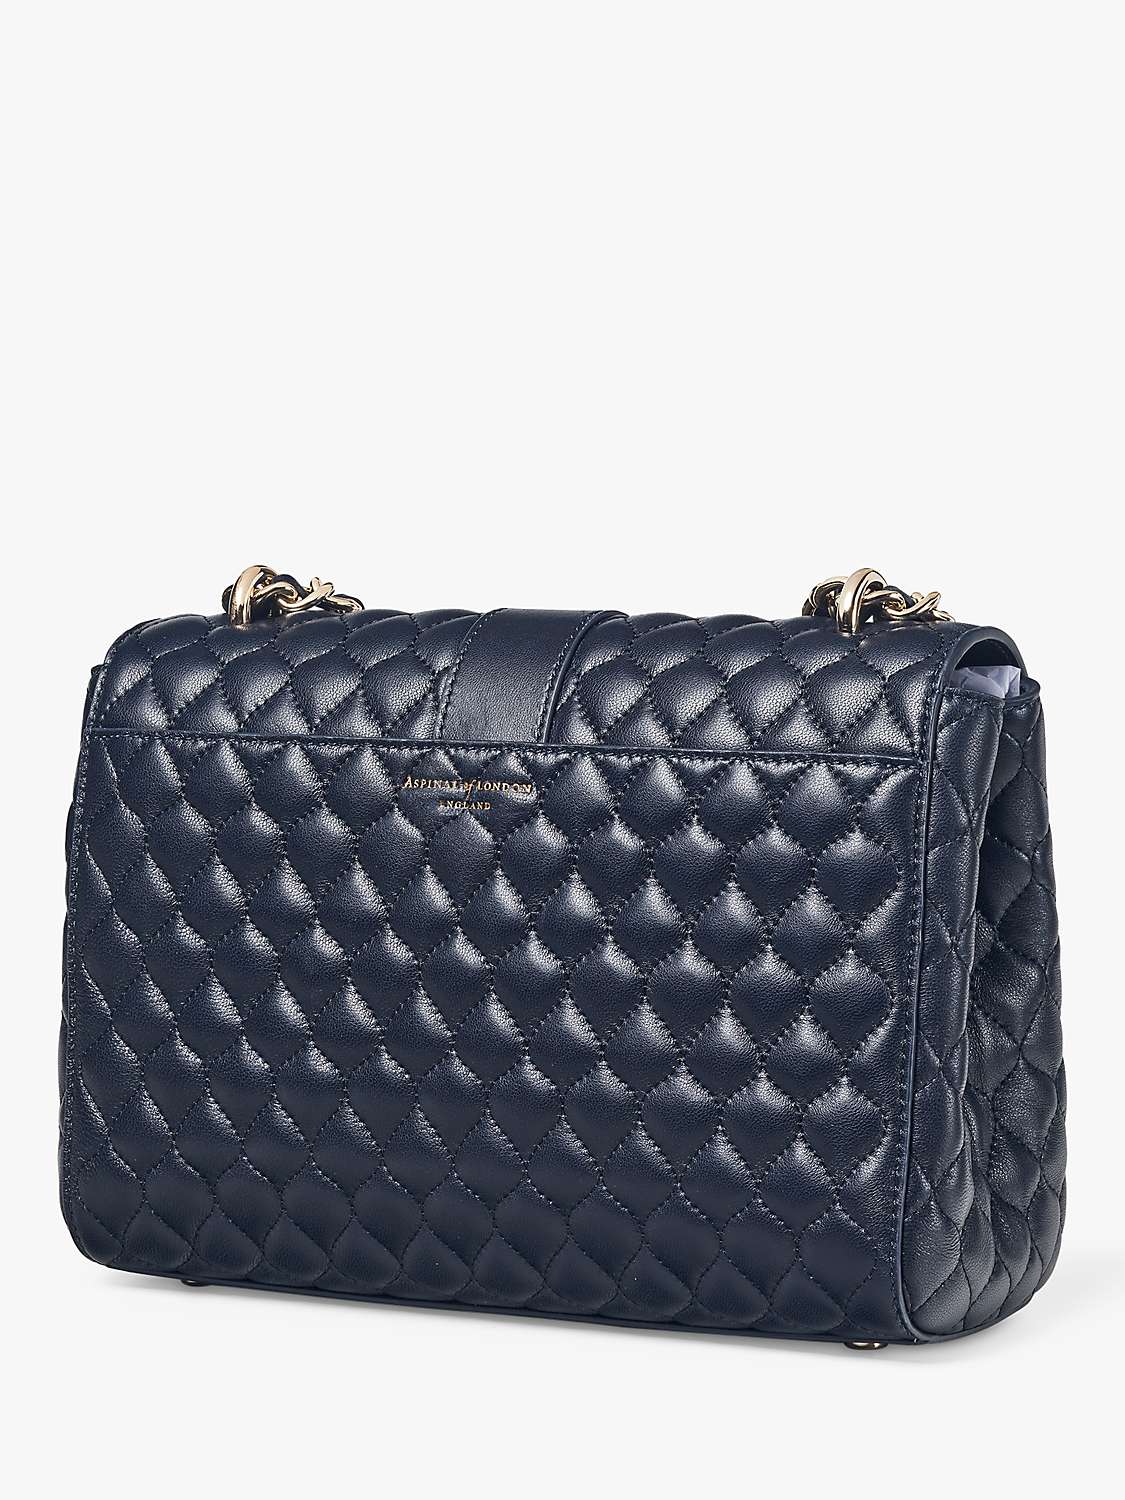 Buy Aspinal of London Lottie Large Smooth Quilted Leather Shoulder Bag Online at johnlewis.com